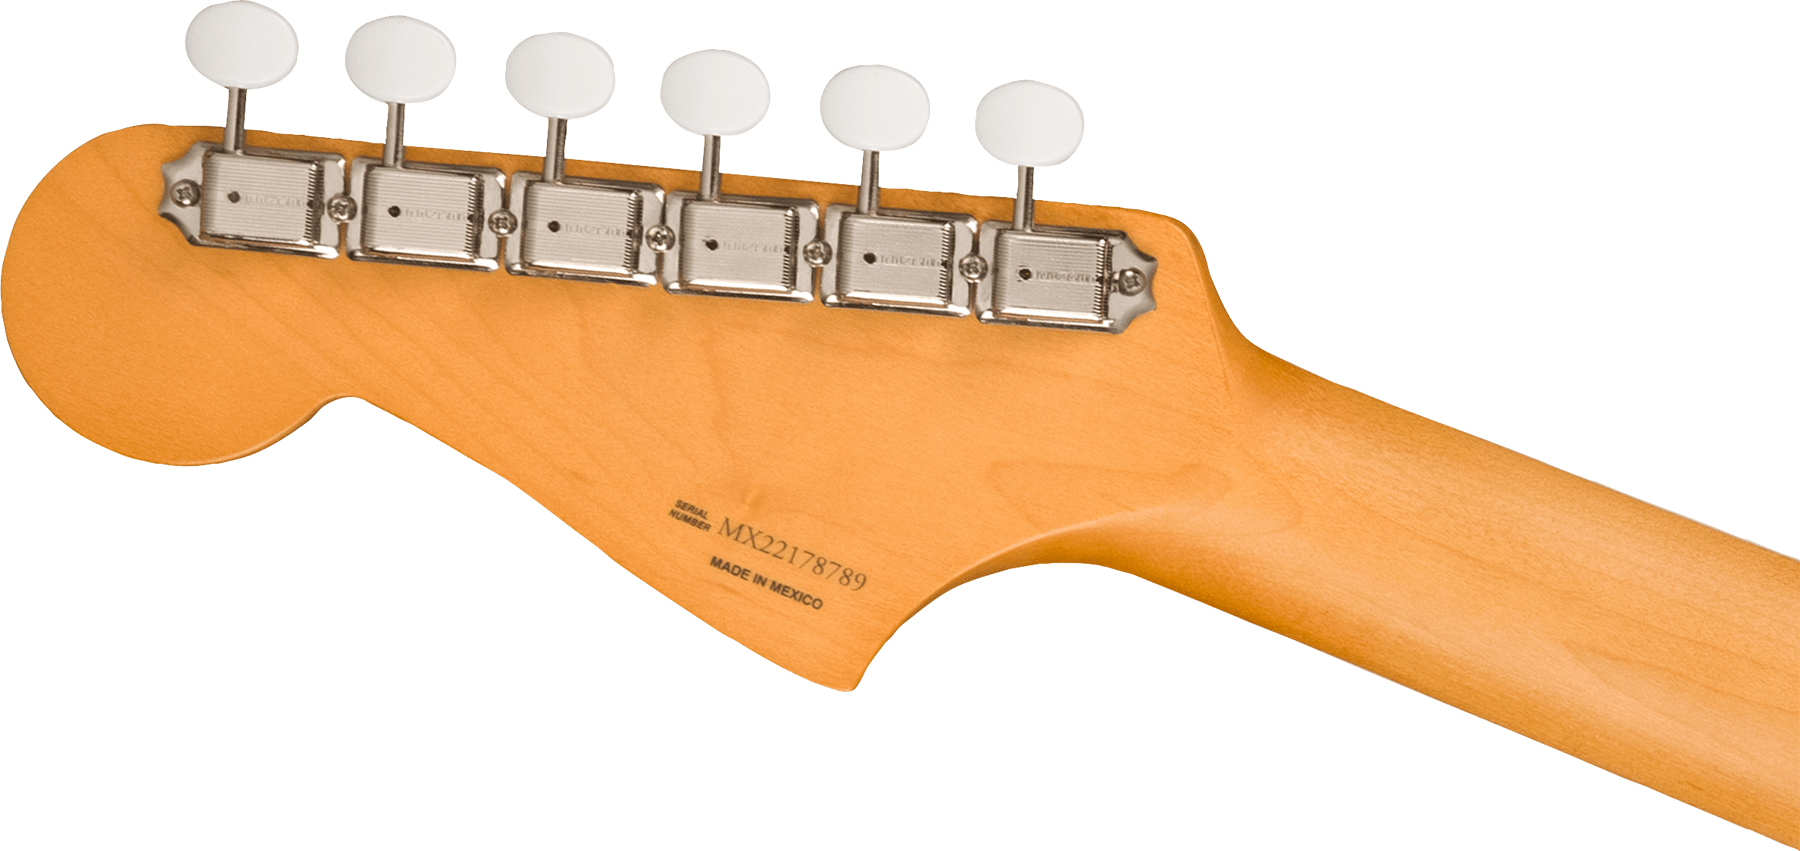 Fender Jazzmaster Gold Foil Ltd Mex 3mh Trem Bigsby Eb - Candy Apple Burst - Retro-rock elektrische gitaar - Variation 3